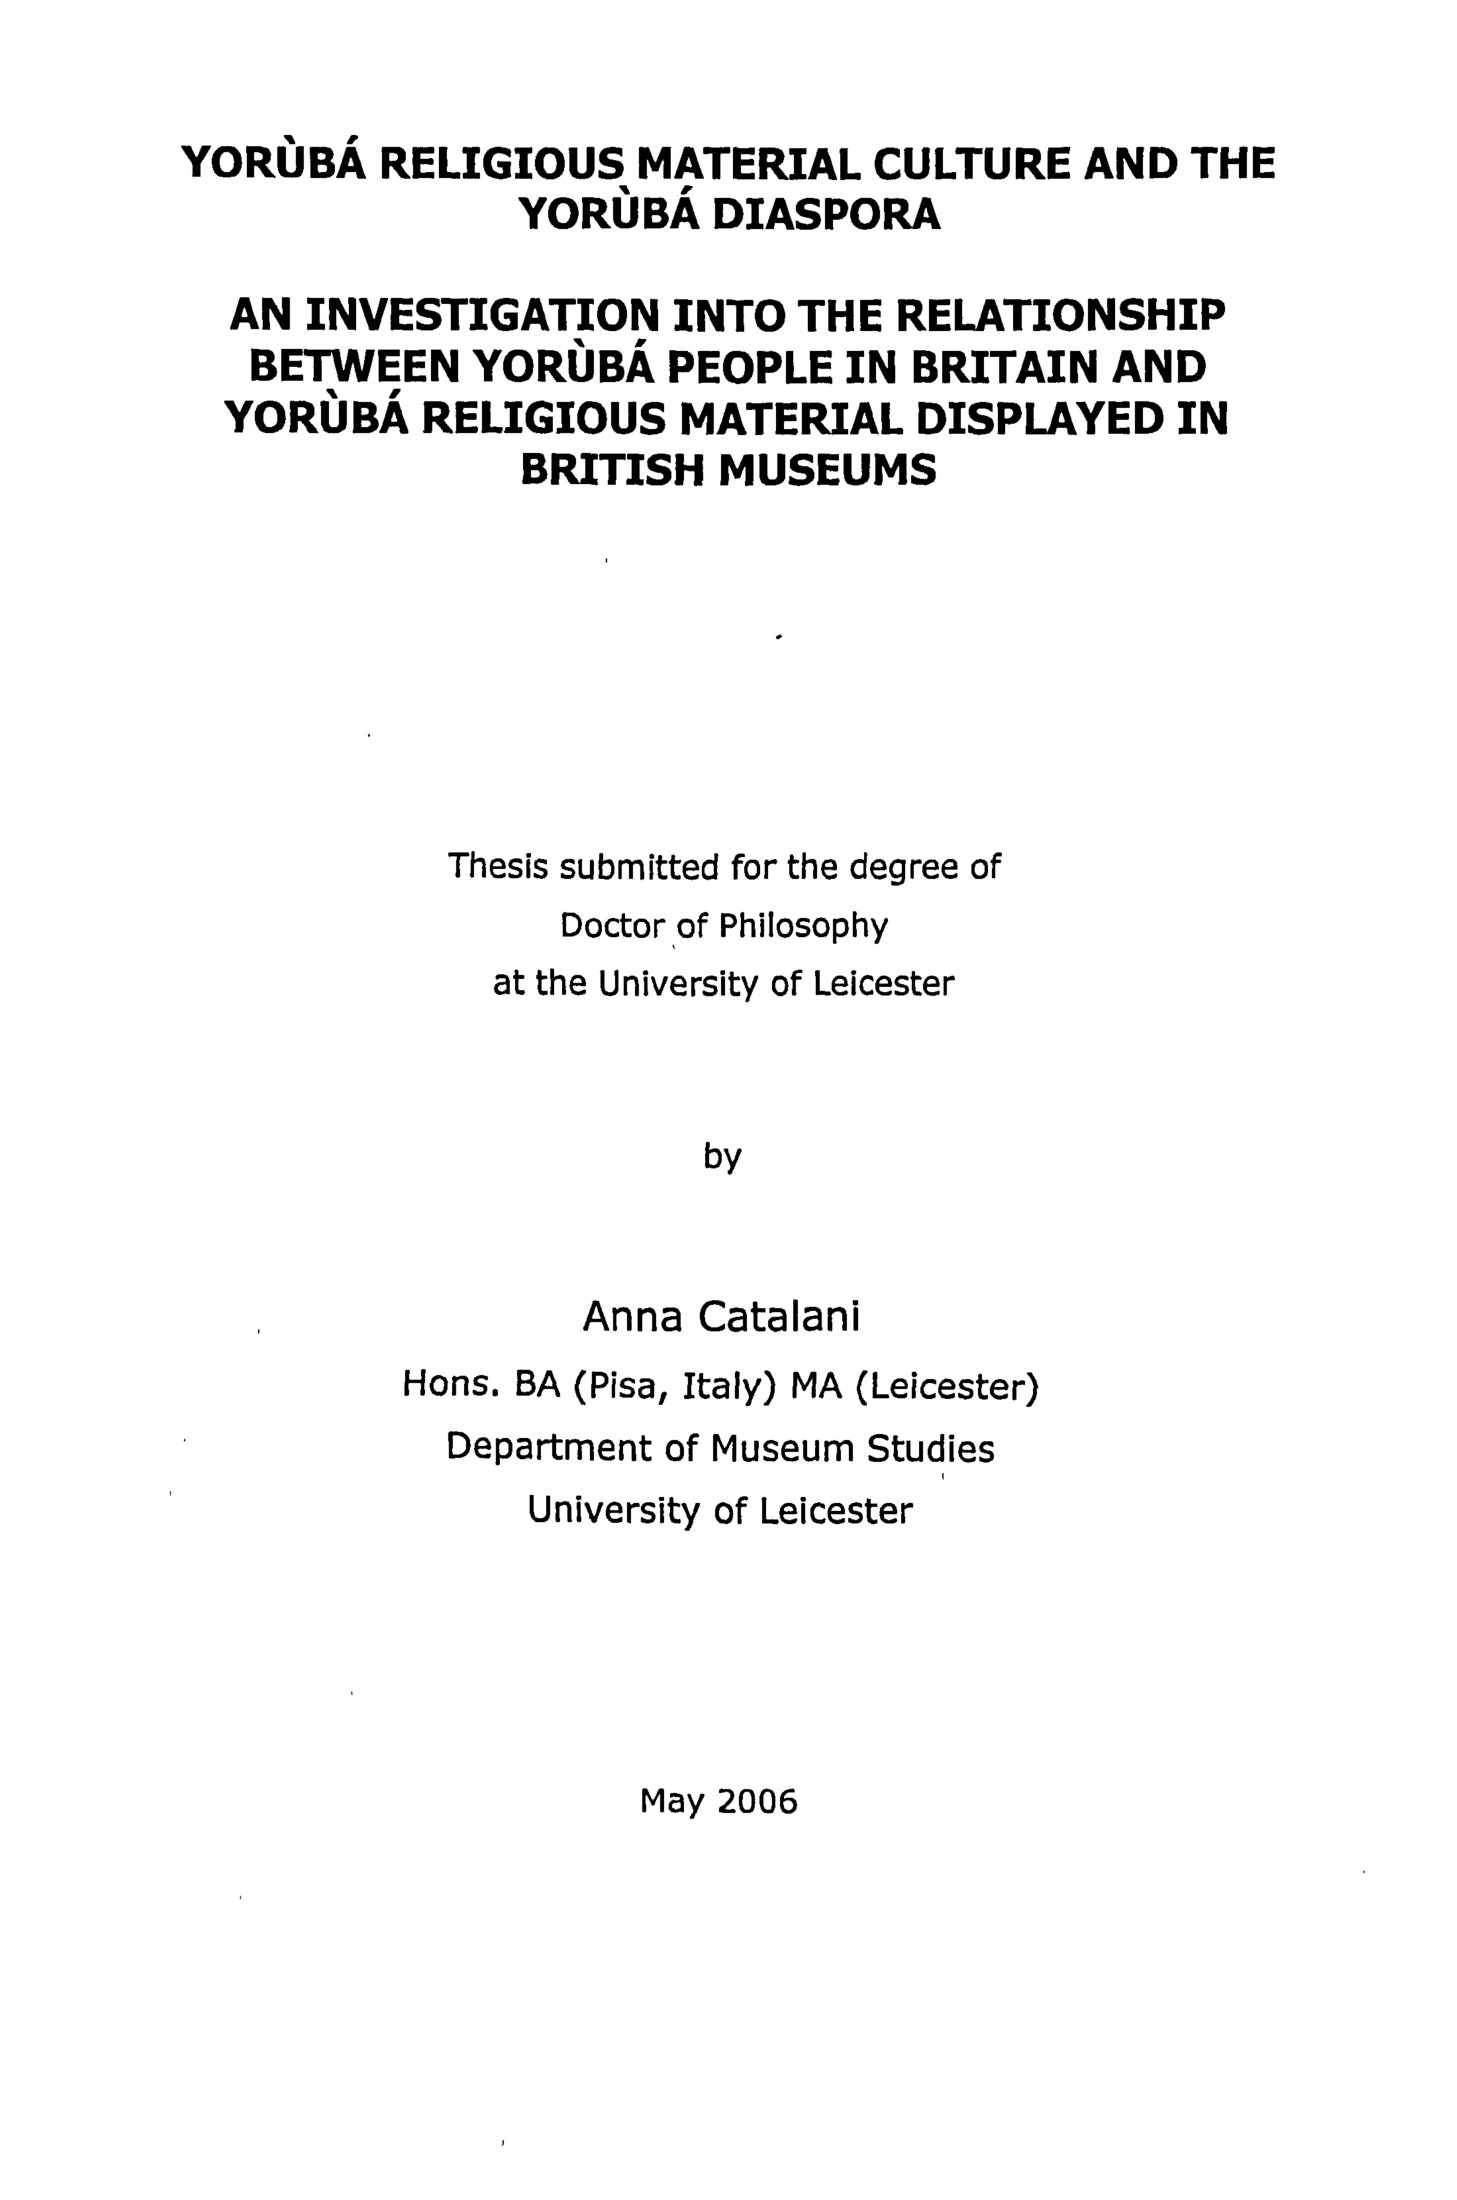 YORUBA RELIGIOUS MATERIAL CULTURE 2006